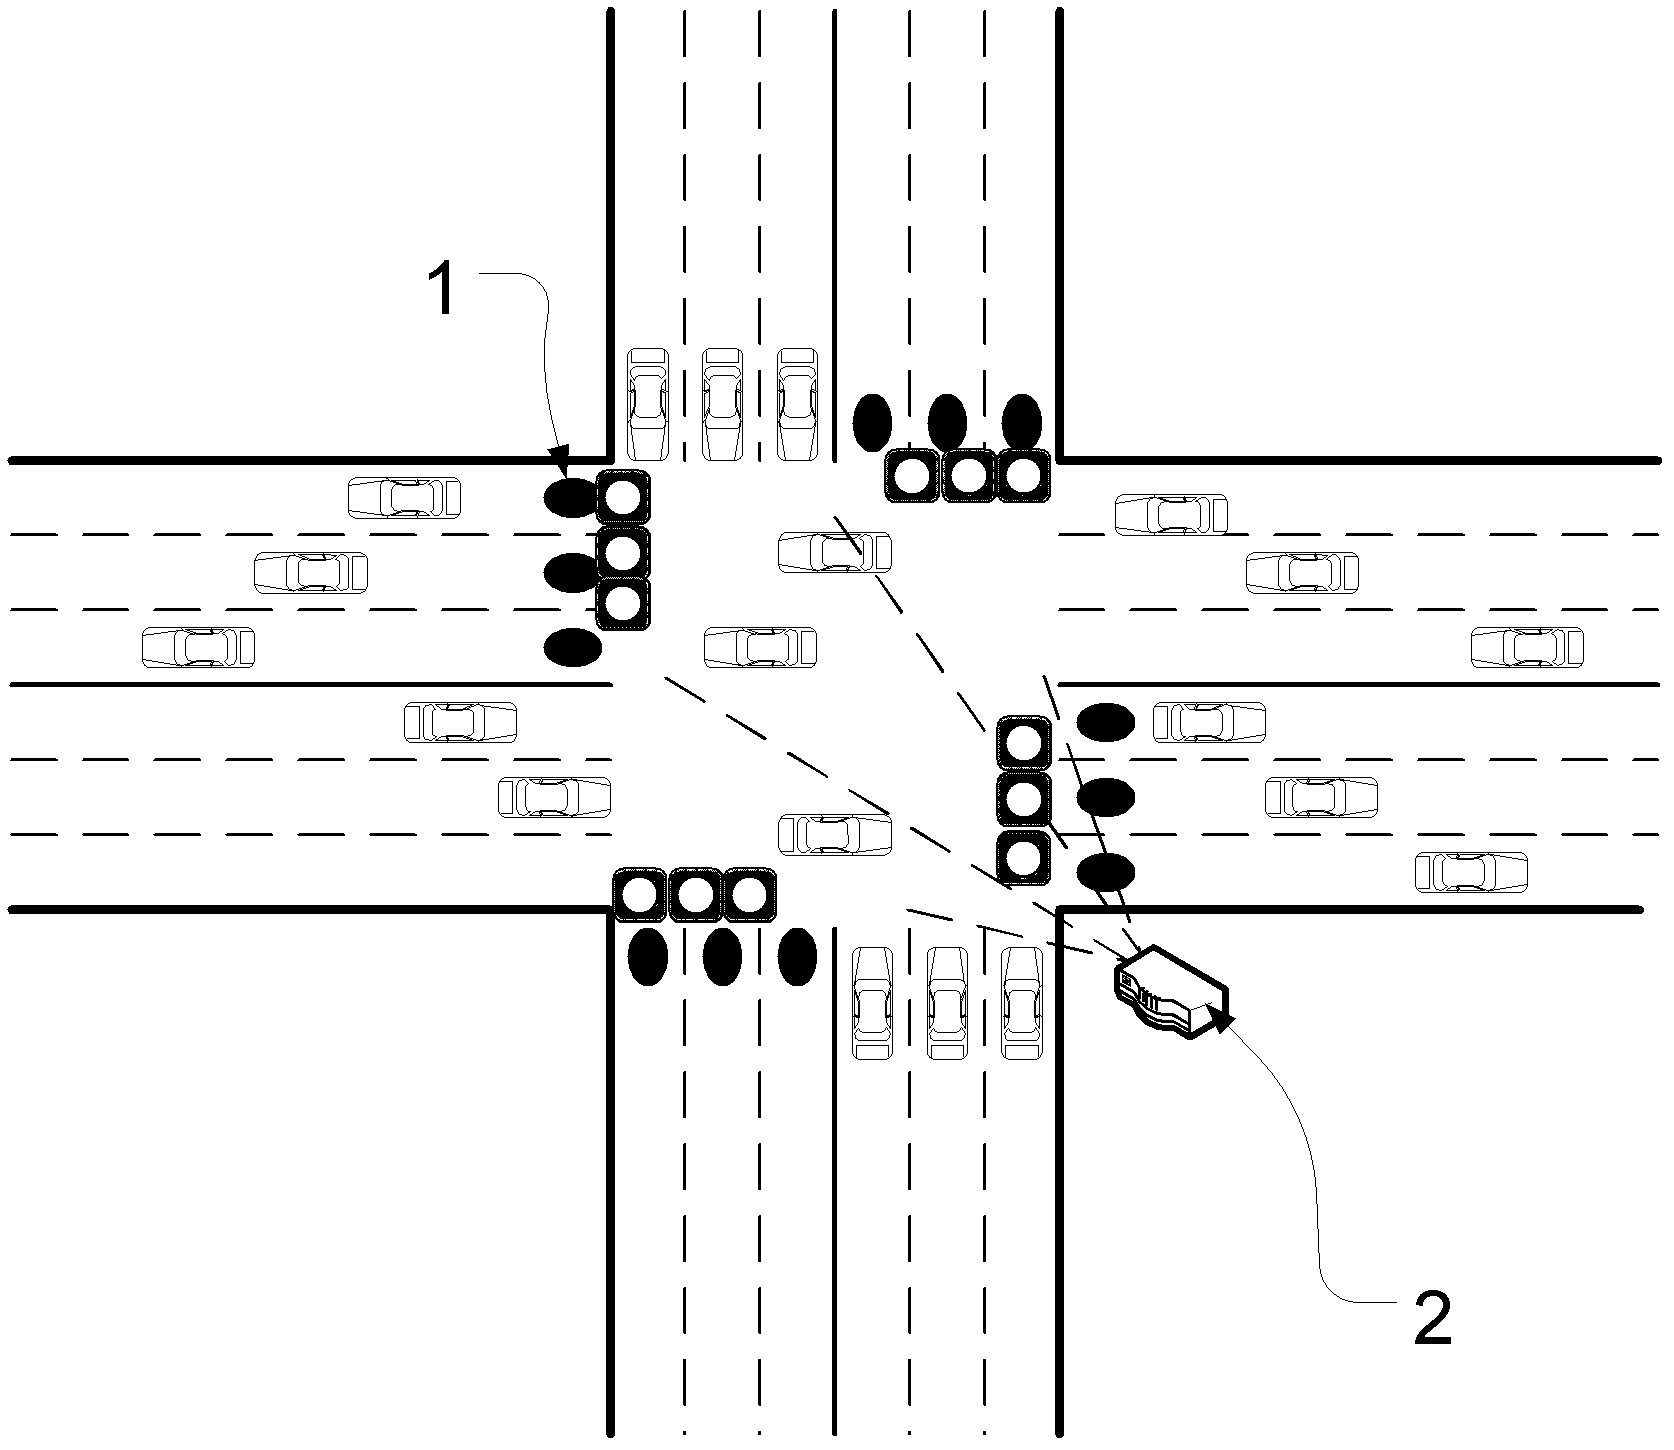 Traffic light control method